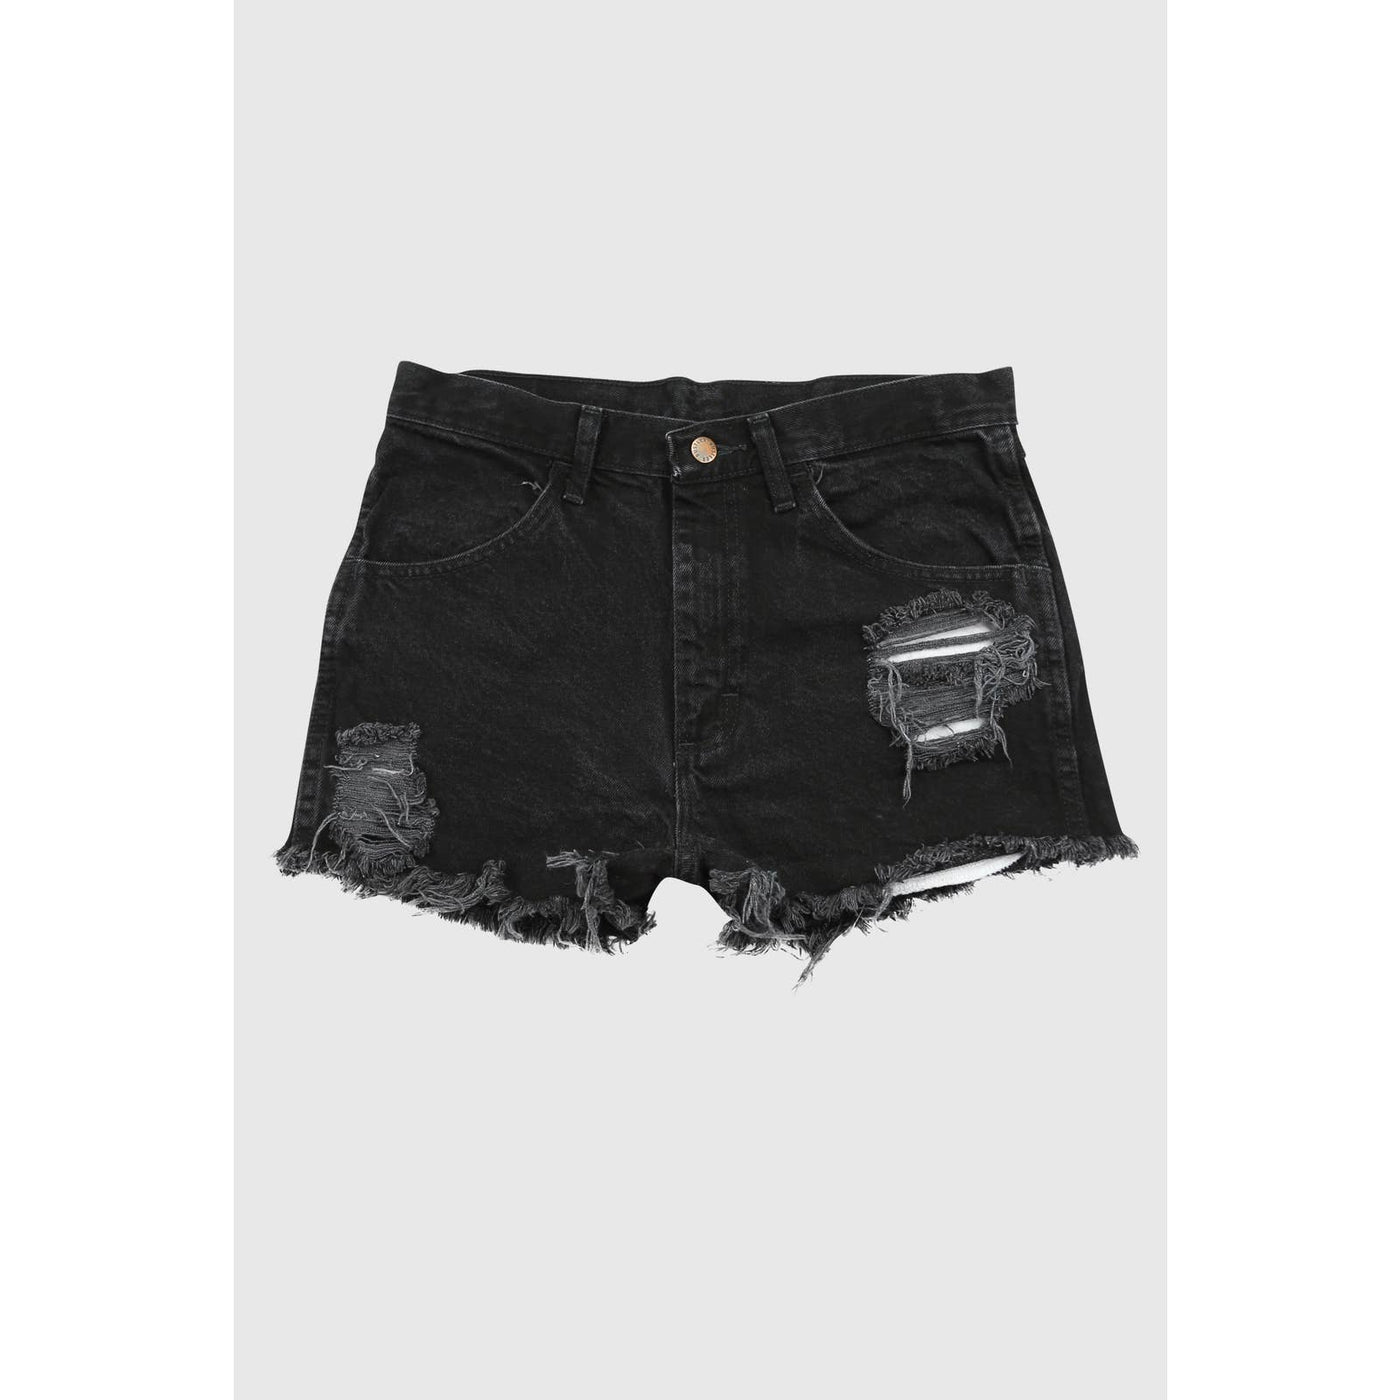 Vintage Rustler High Waisted Black Distressed Shorts